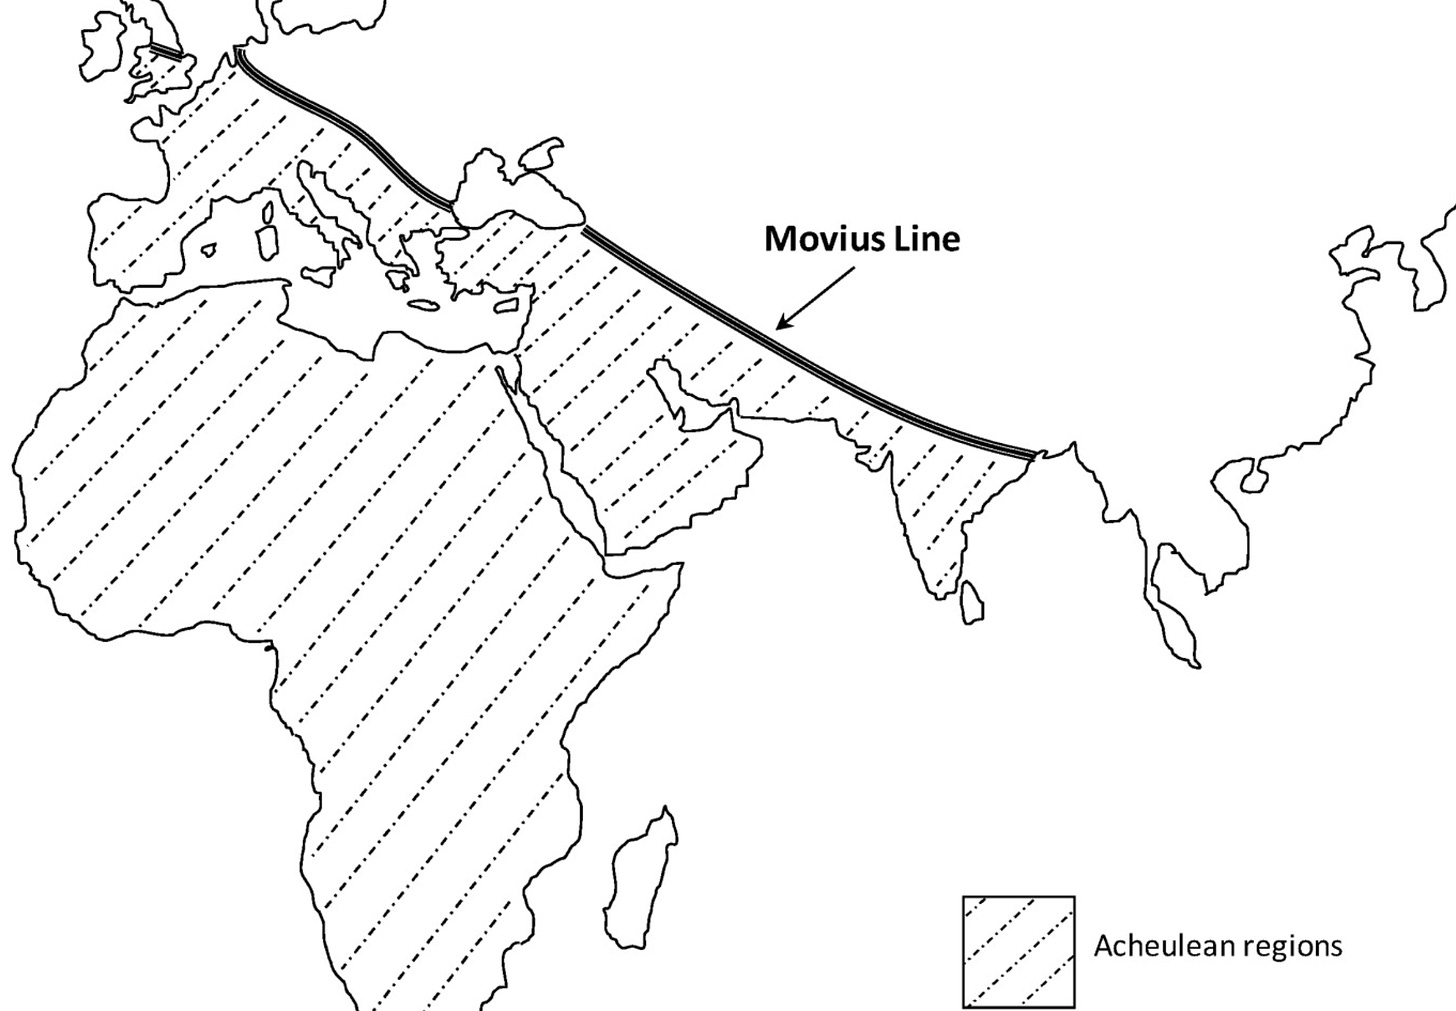 Movious Line